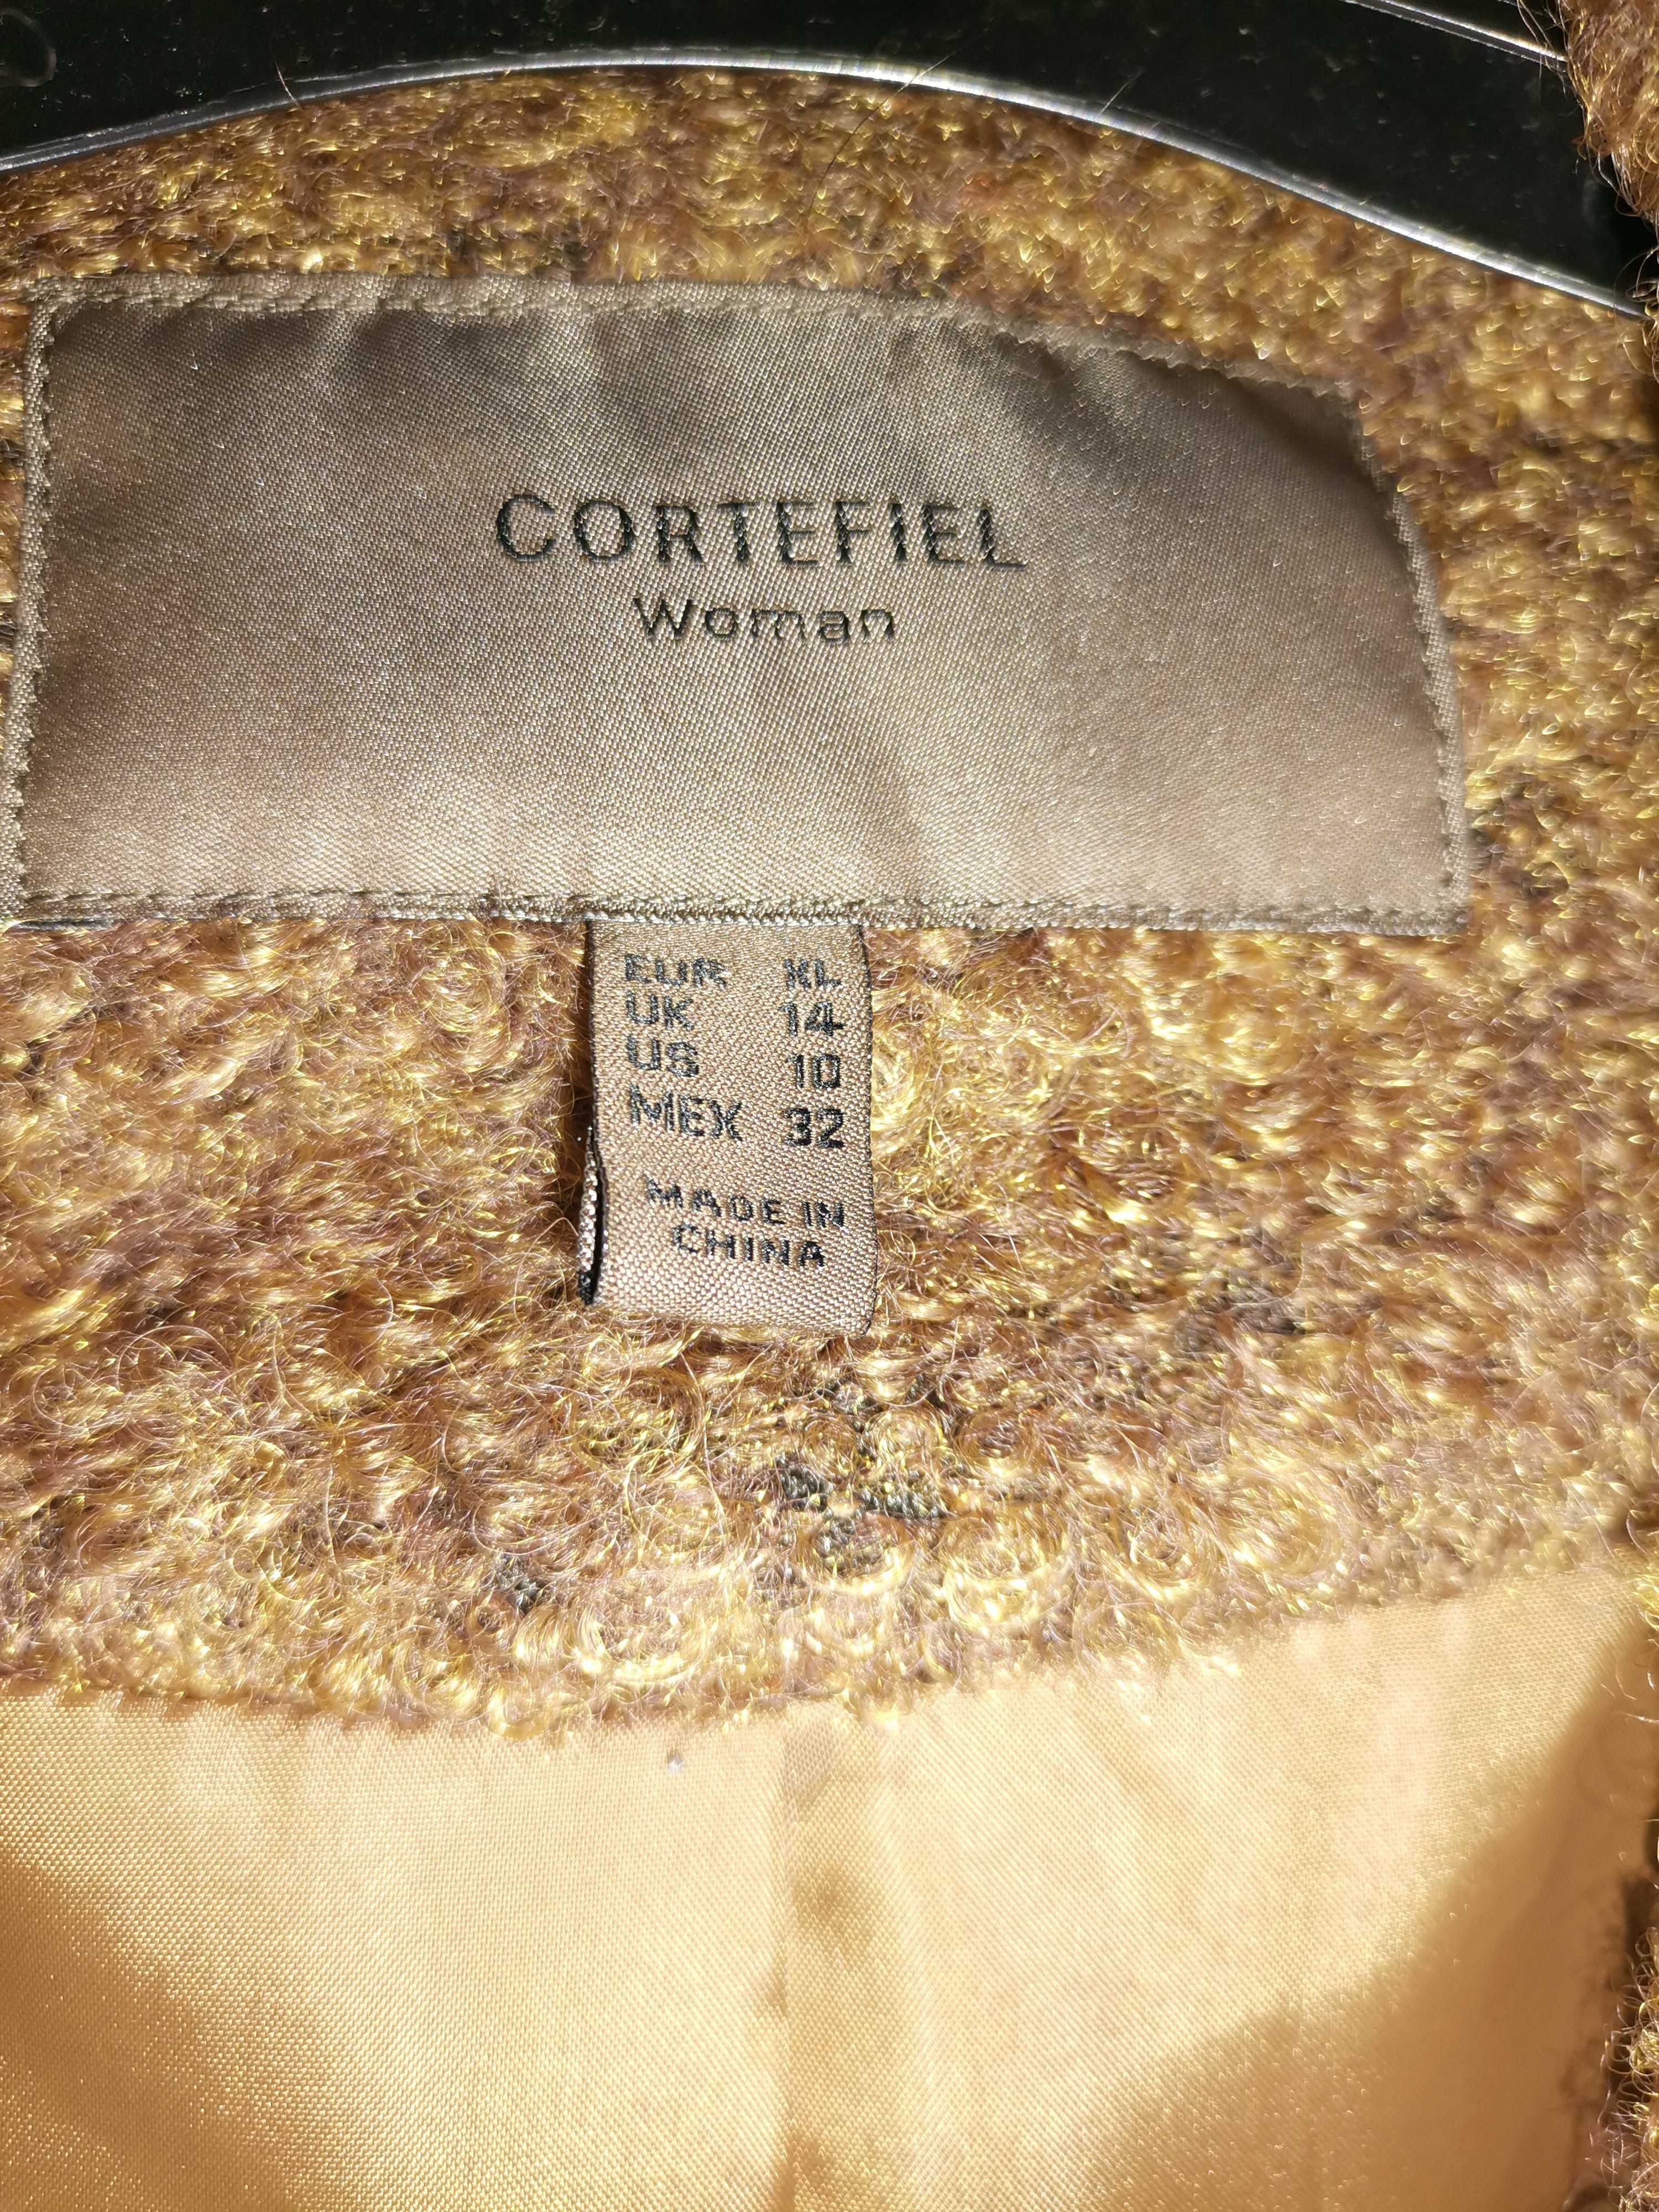 Casaco Cortfiel pouco usado